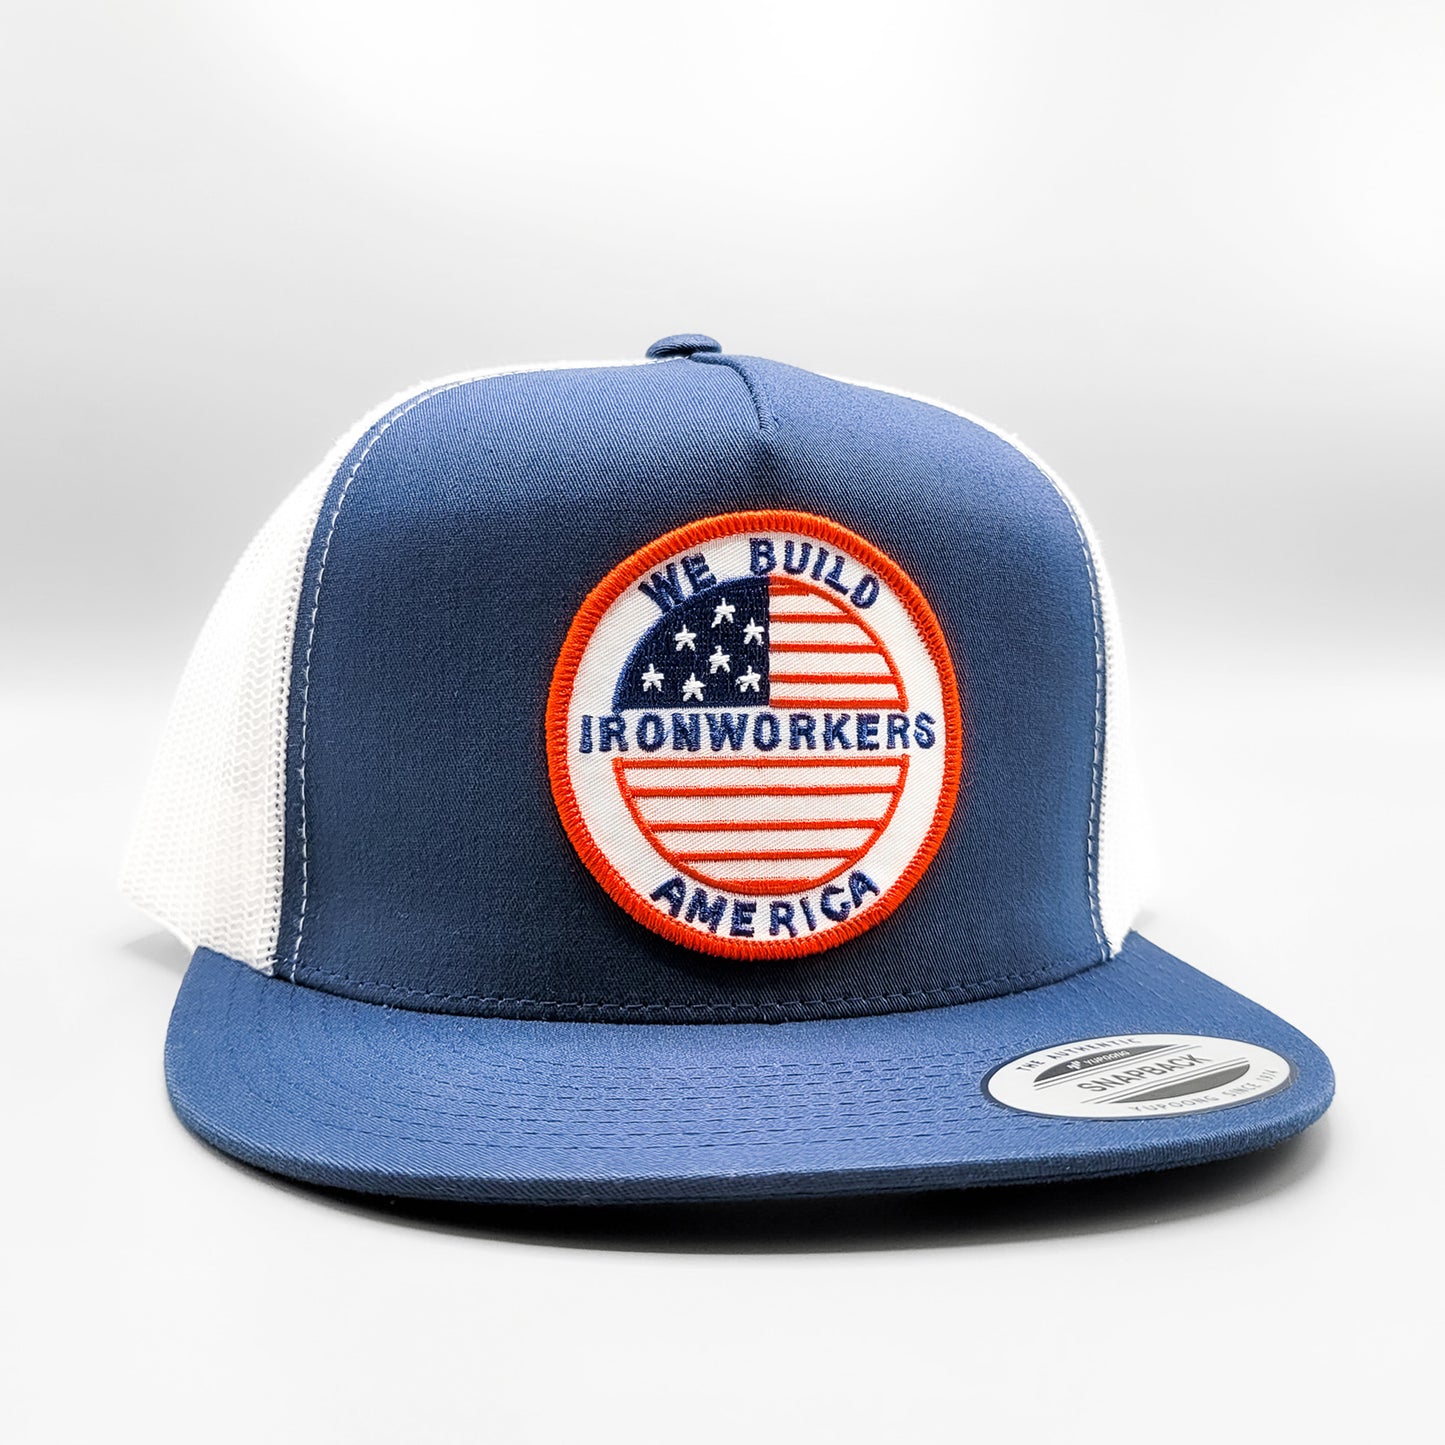 USA Ironworkers "We Build America" Union Welder Navy Trucker Hat